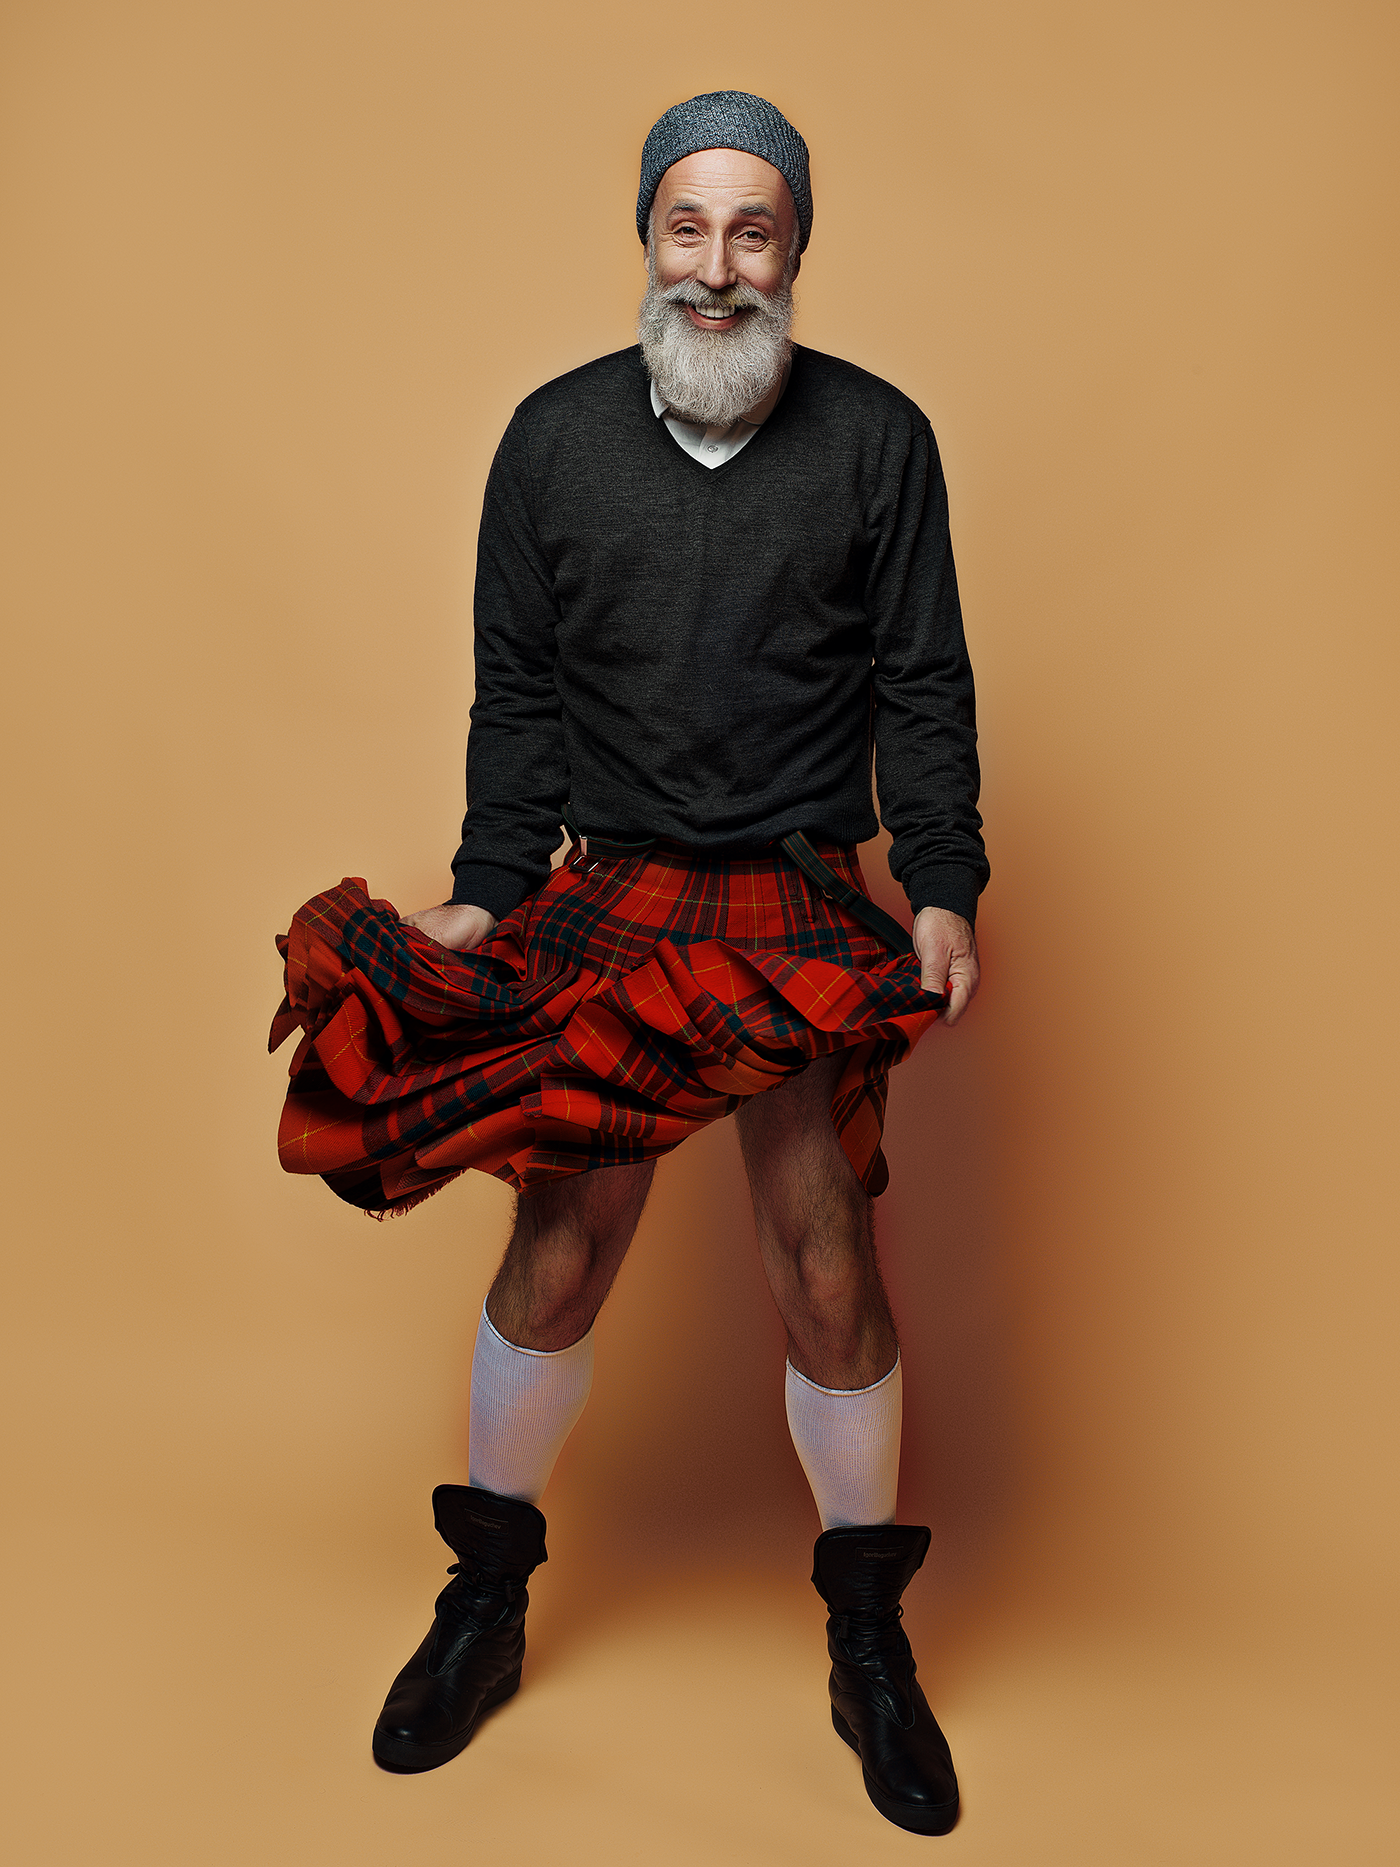 alex buts scotland scottish pentax645z Pentax 645z photographer Male Models male portrait photo